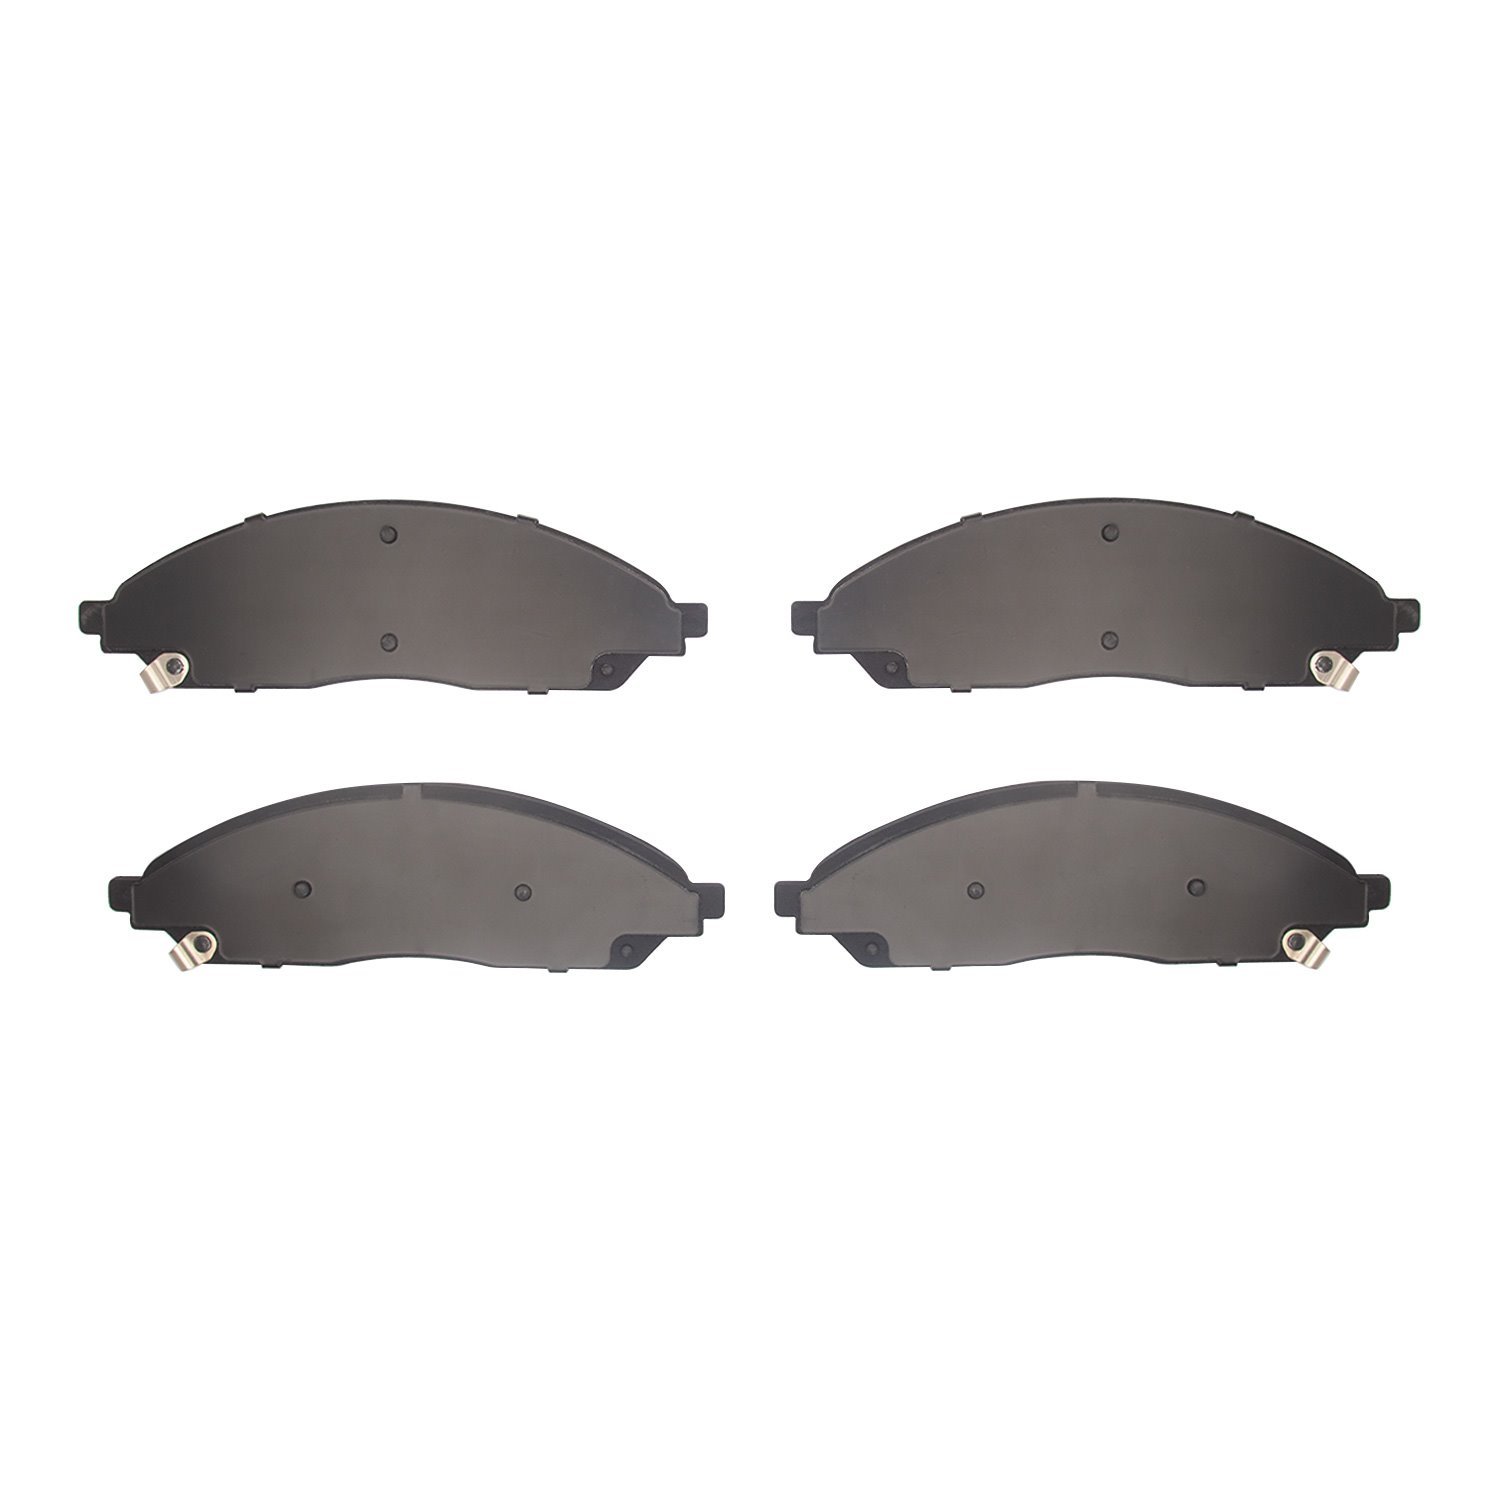 1551-2402-00 5000 Advanced Ceramic Brake Pads, Fits Select Mopar, Position: Front